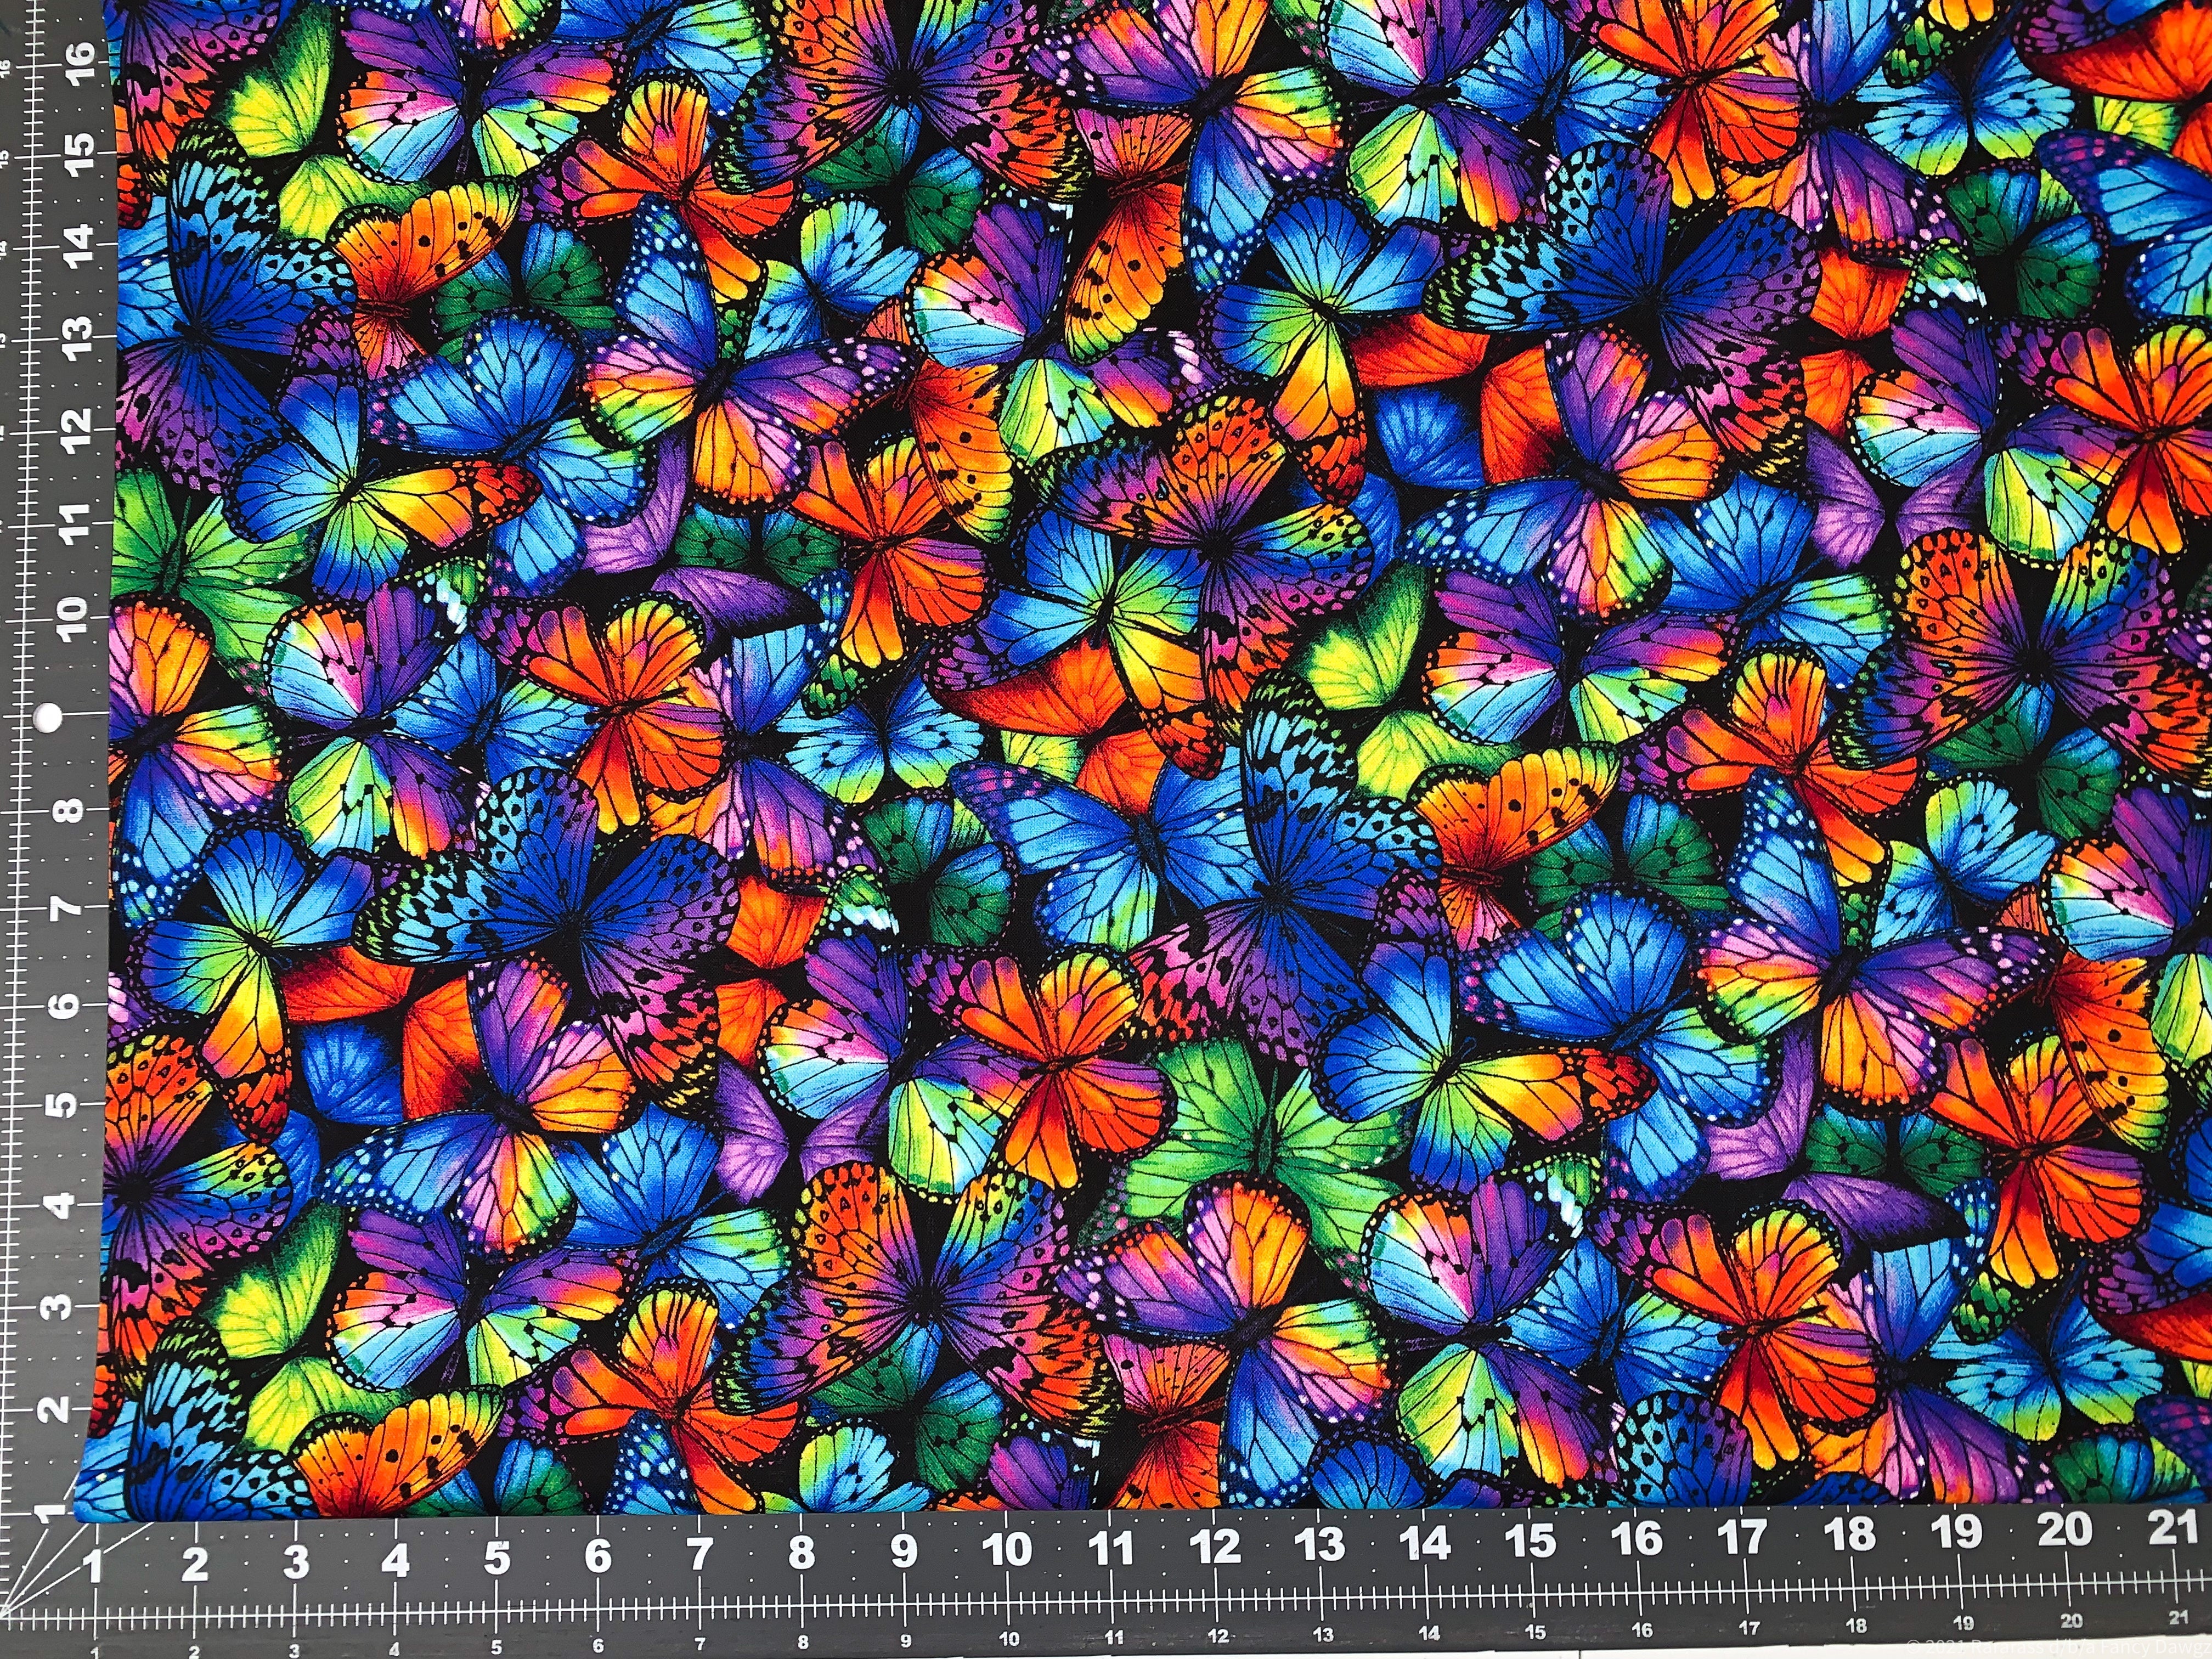 Magic Butterfly fabric C8531 Butterflies cotton fabric